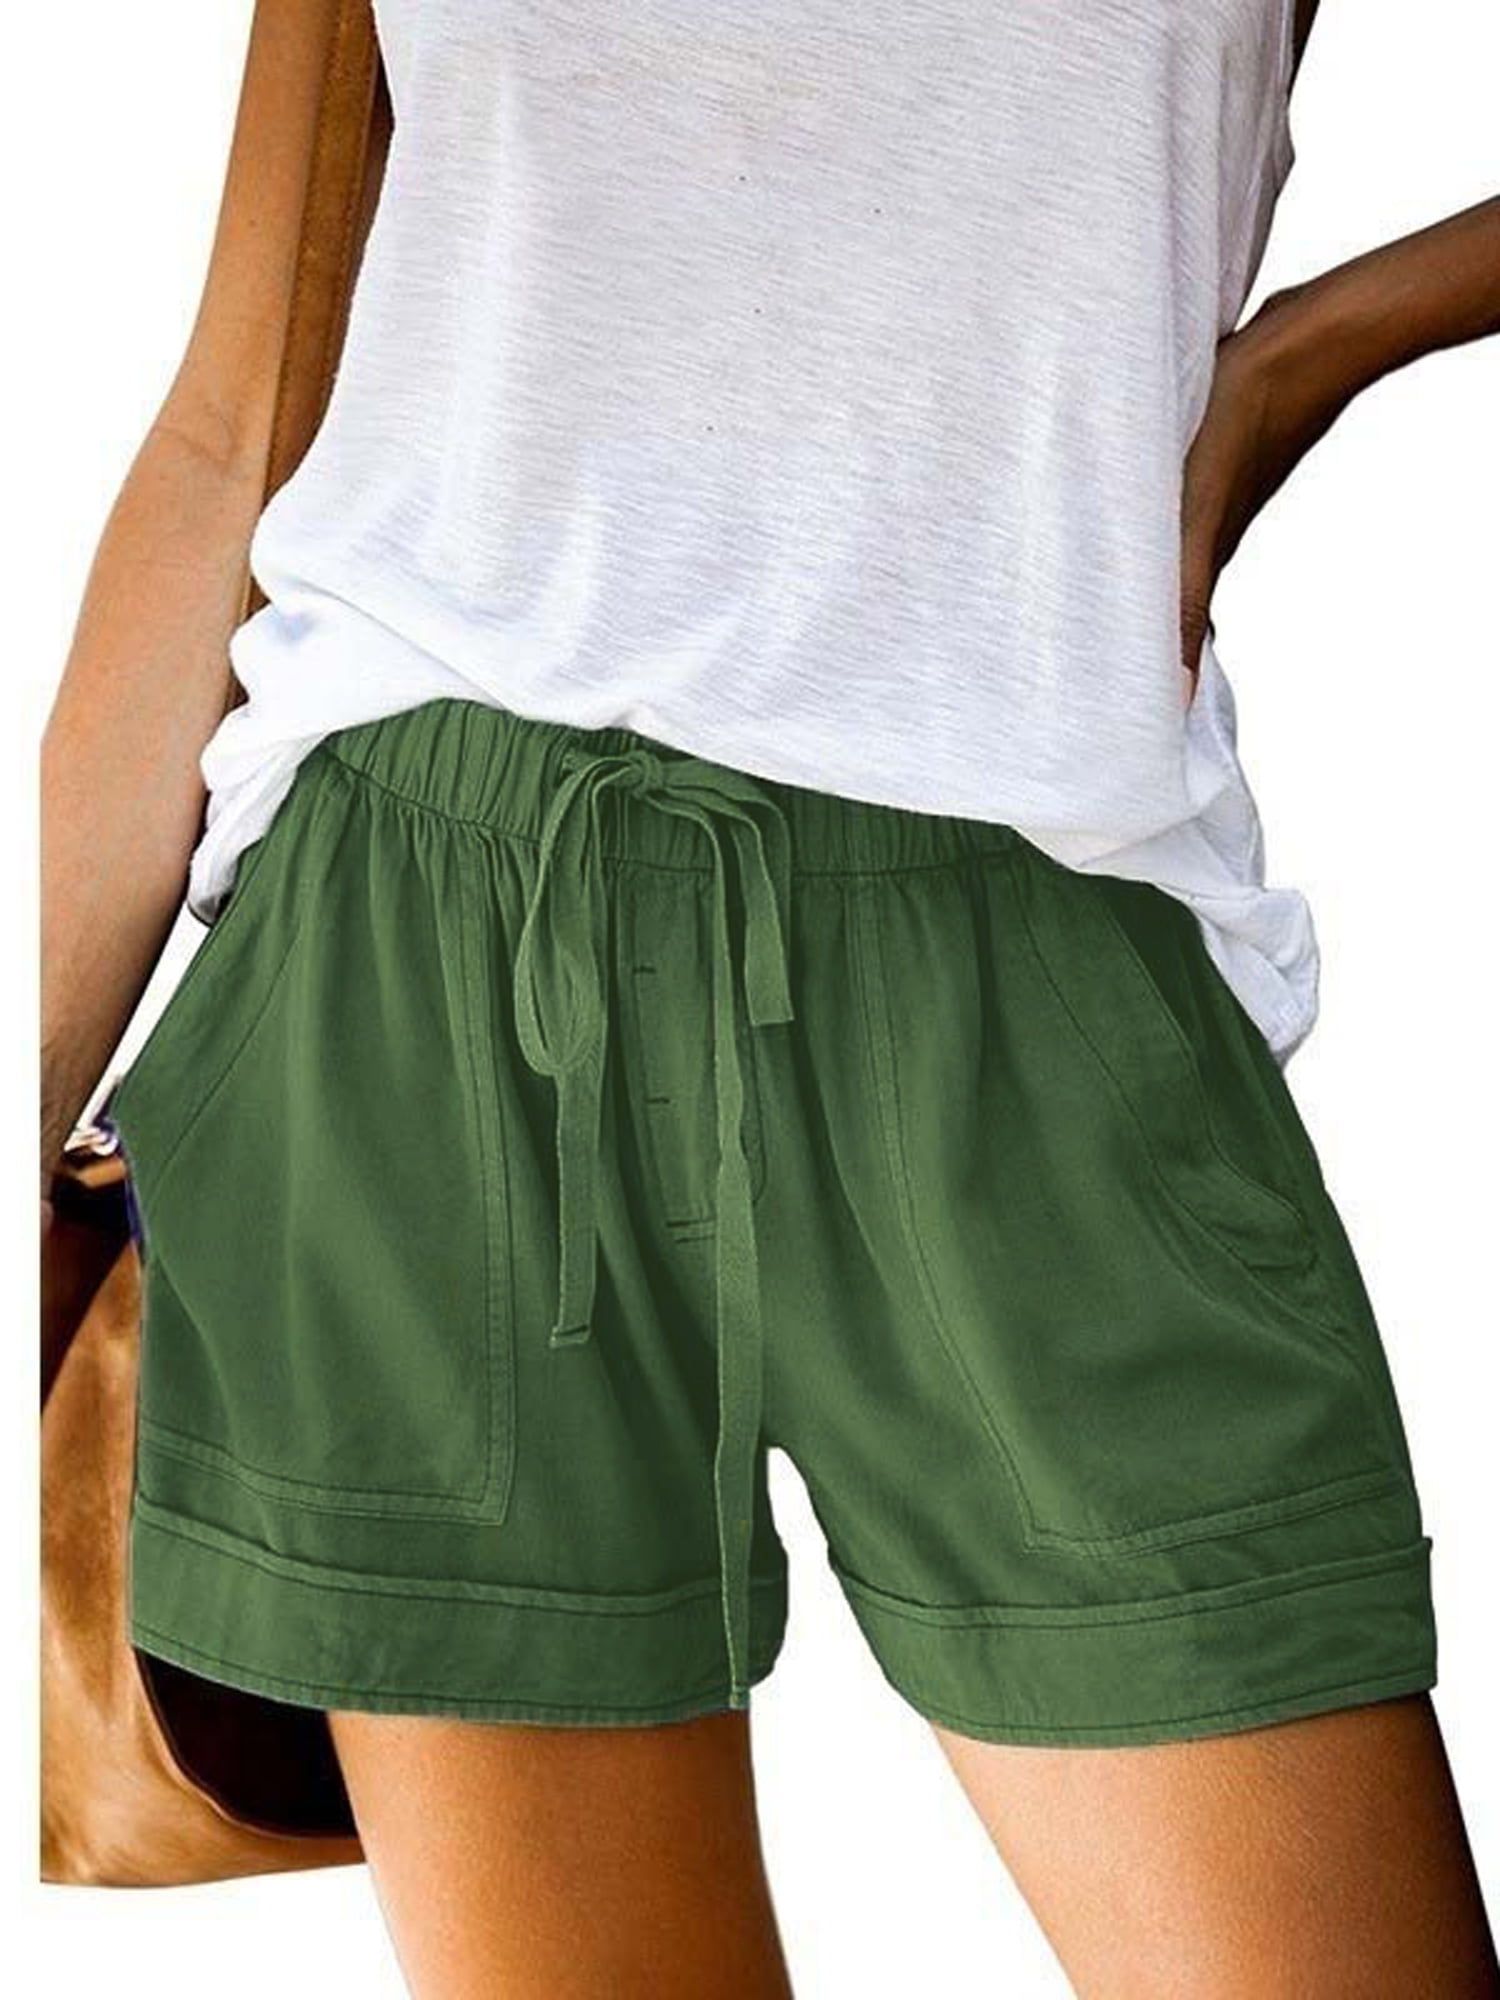 Women's Summer Elastic Waist Hot Pants Casual Drawstring Beach Sports Shorts